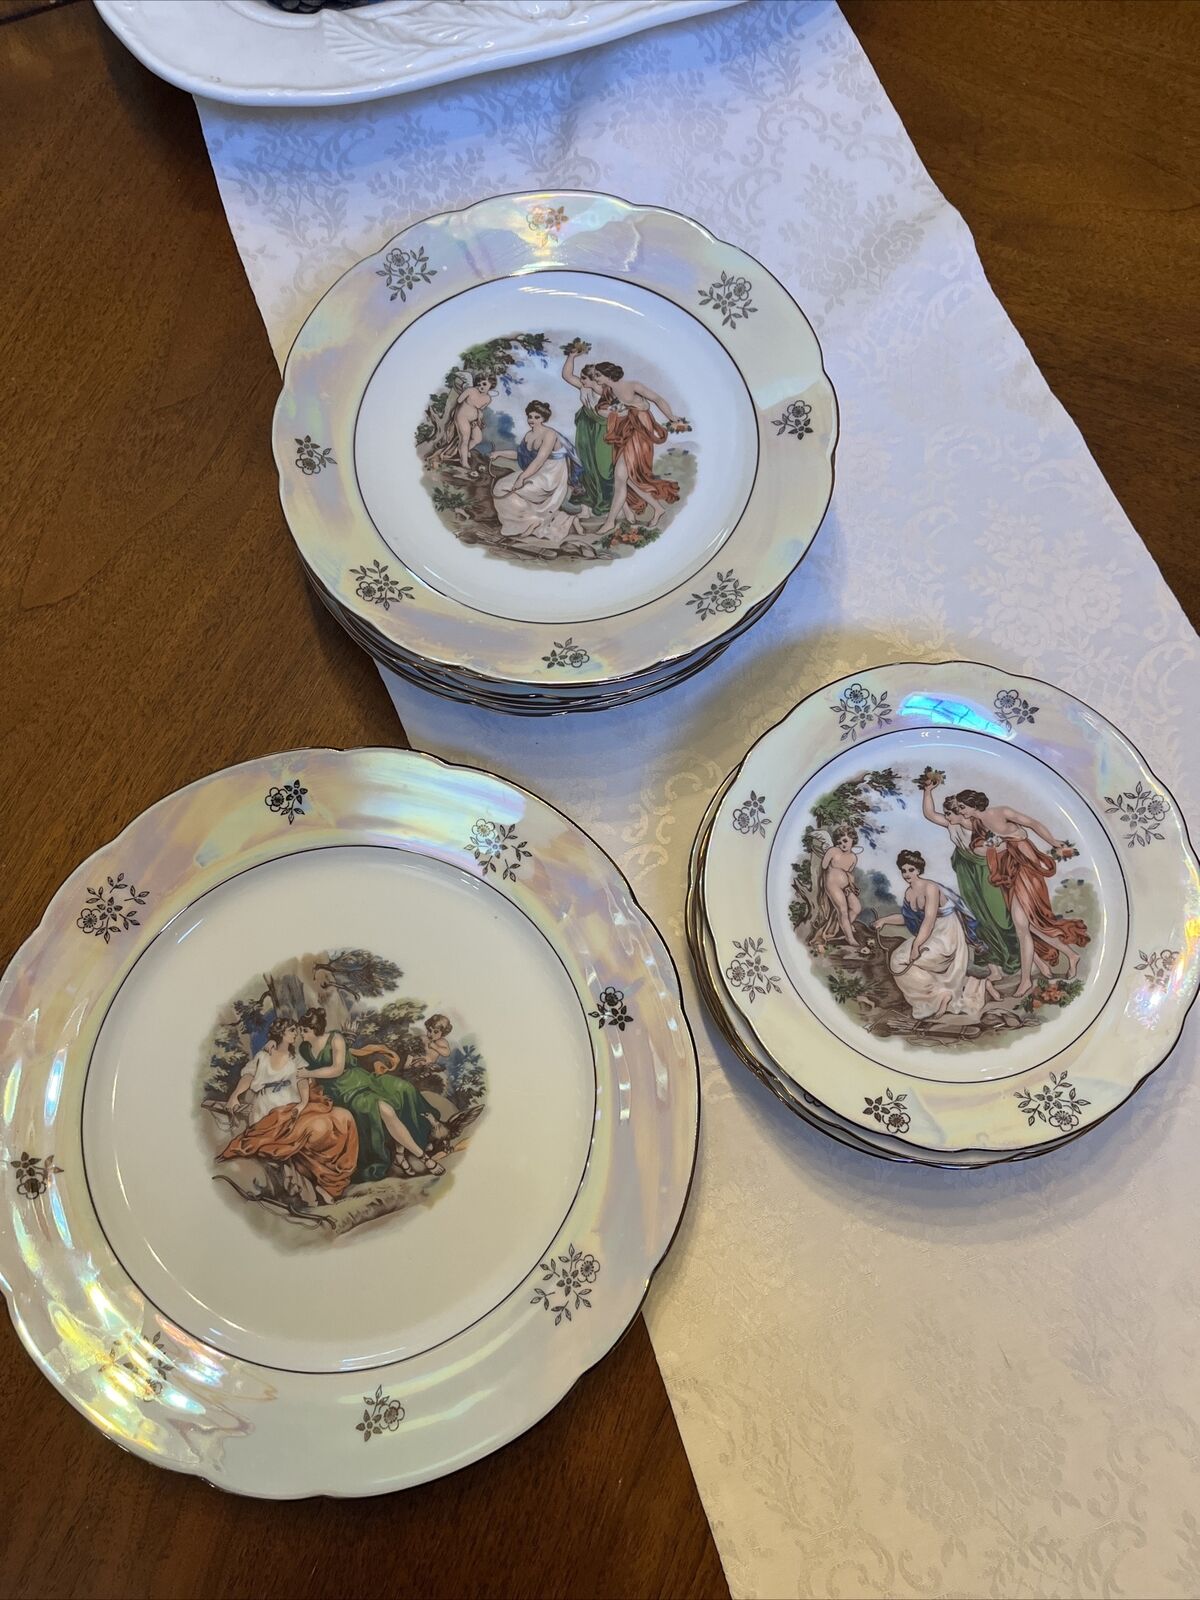 RAREKahla Porcelain Plates(6)7-1/2” + 9” (6) + 1 Lg Serving Plate GDR Germany